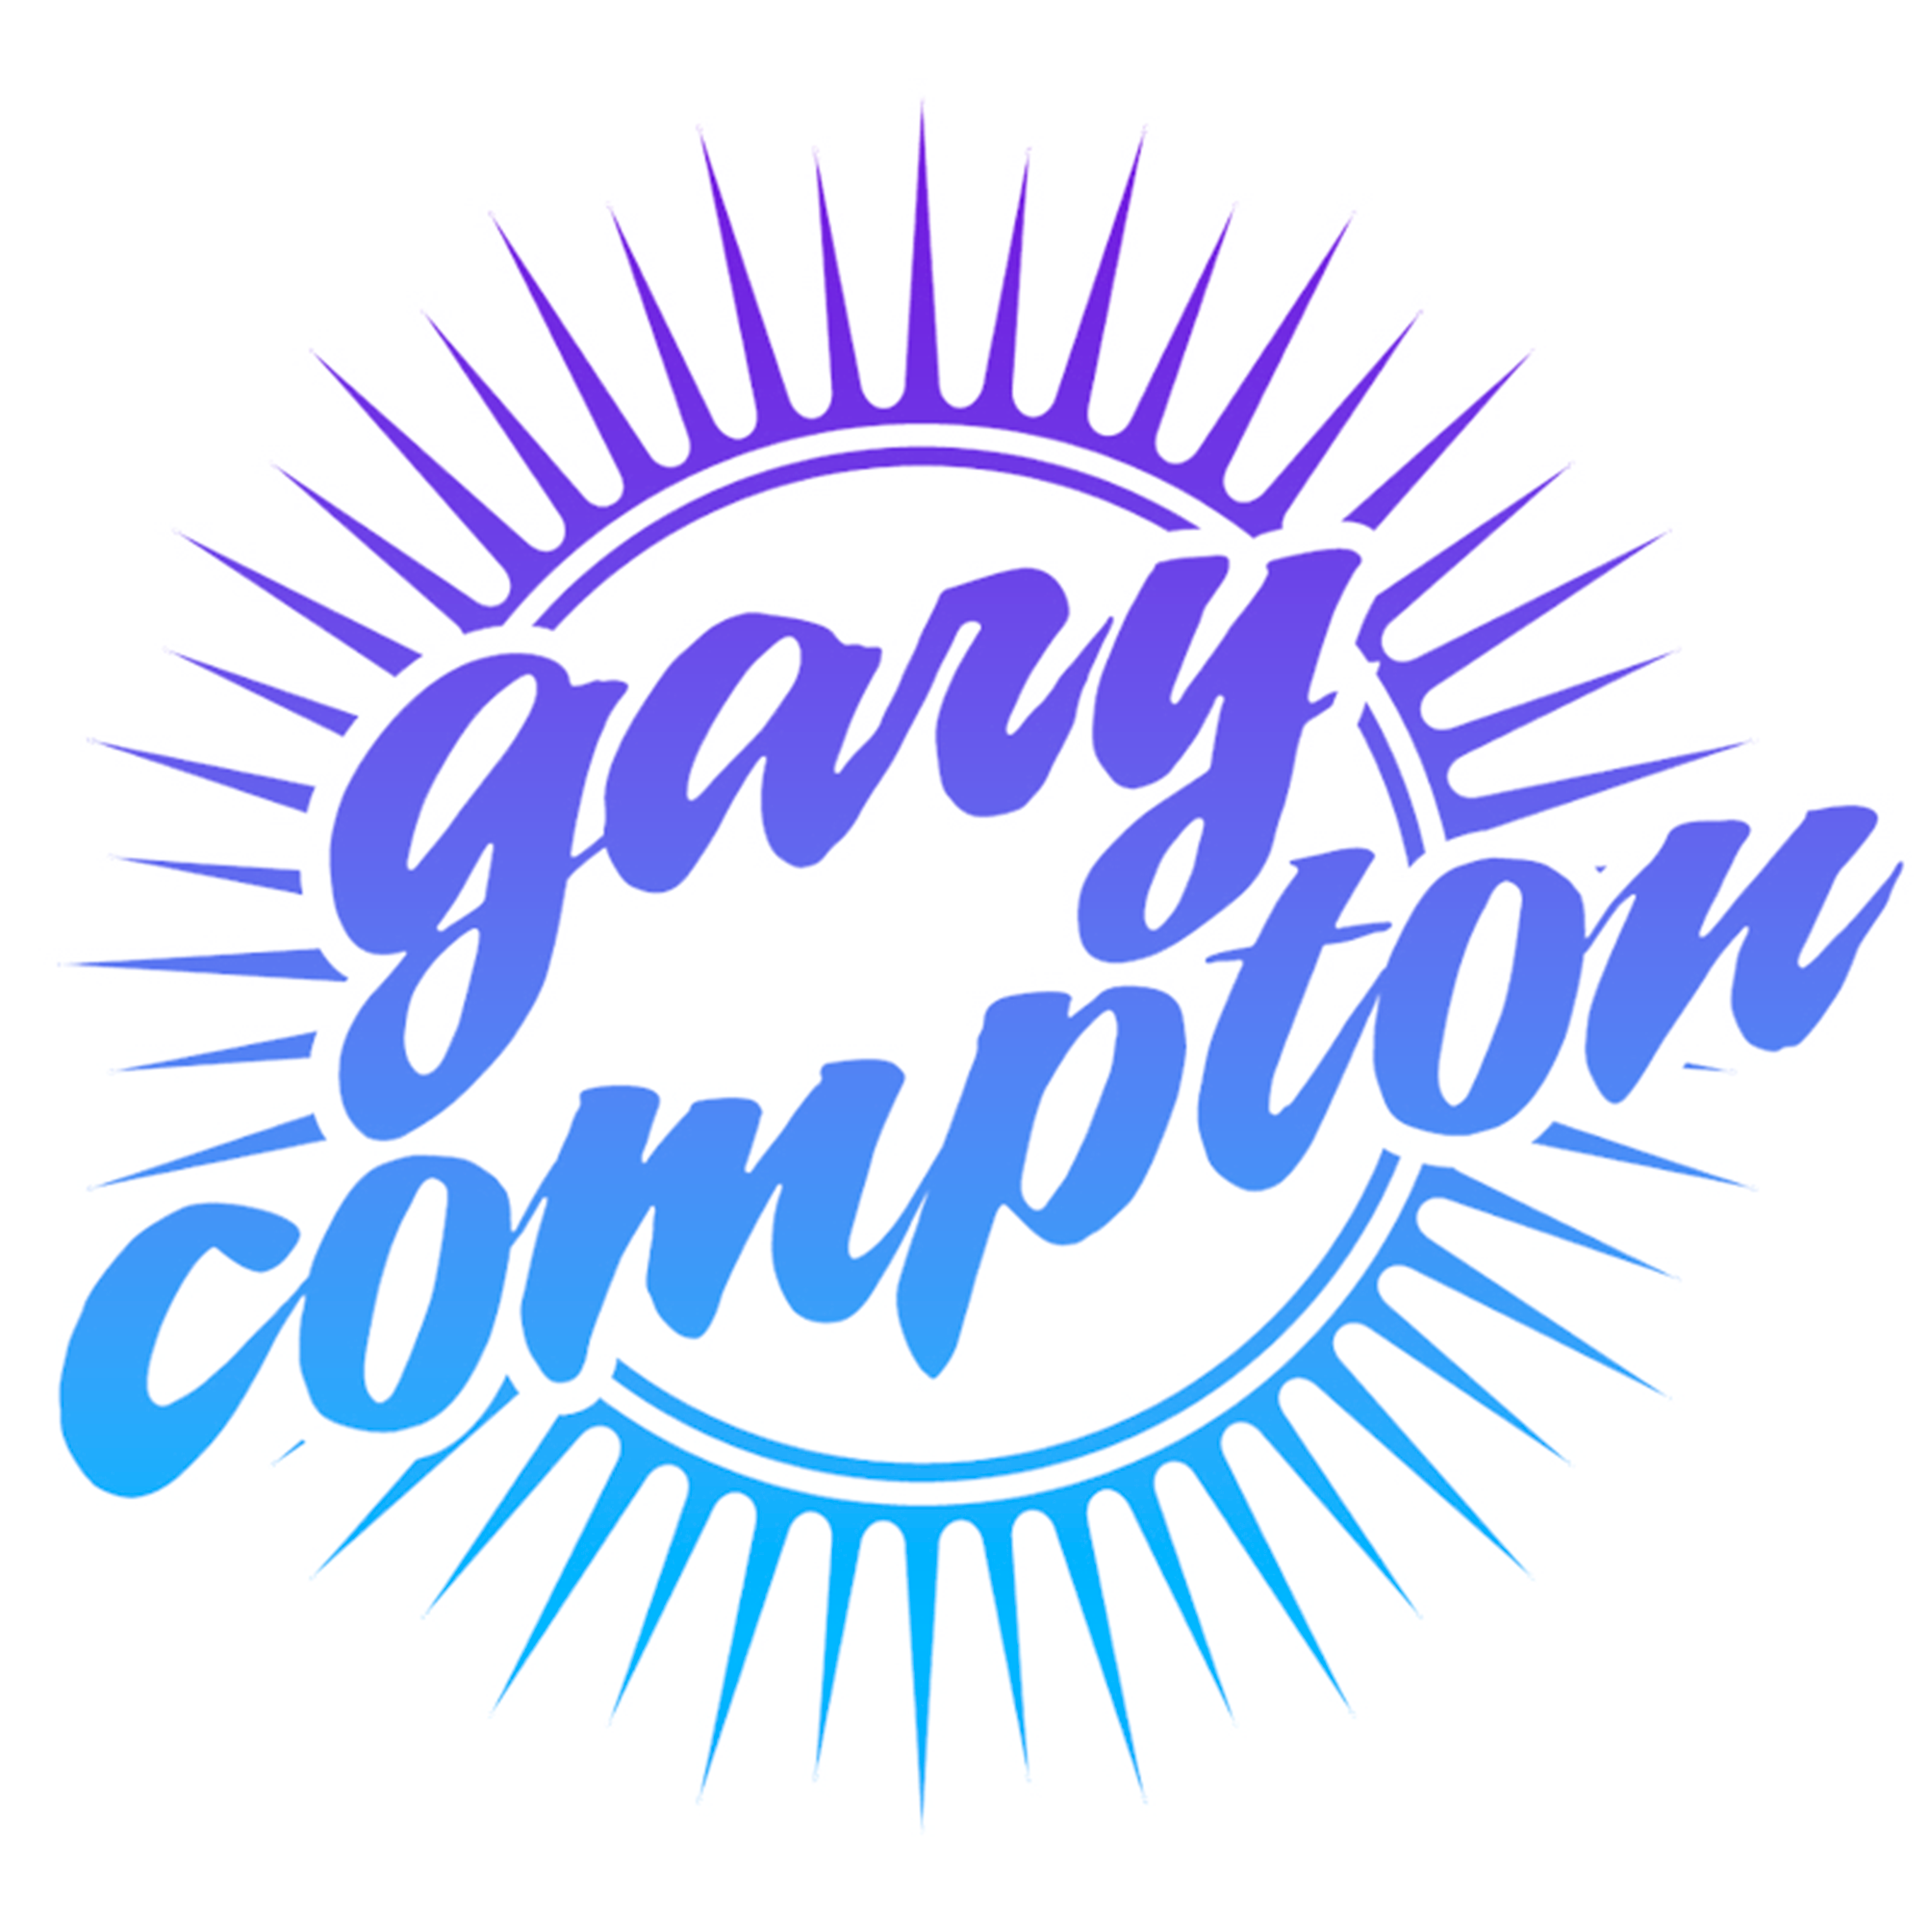 Gary Compton unit stills Photographer sydney